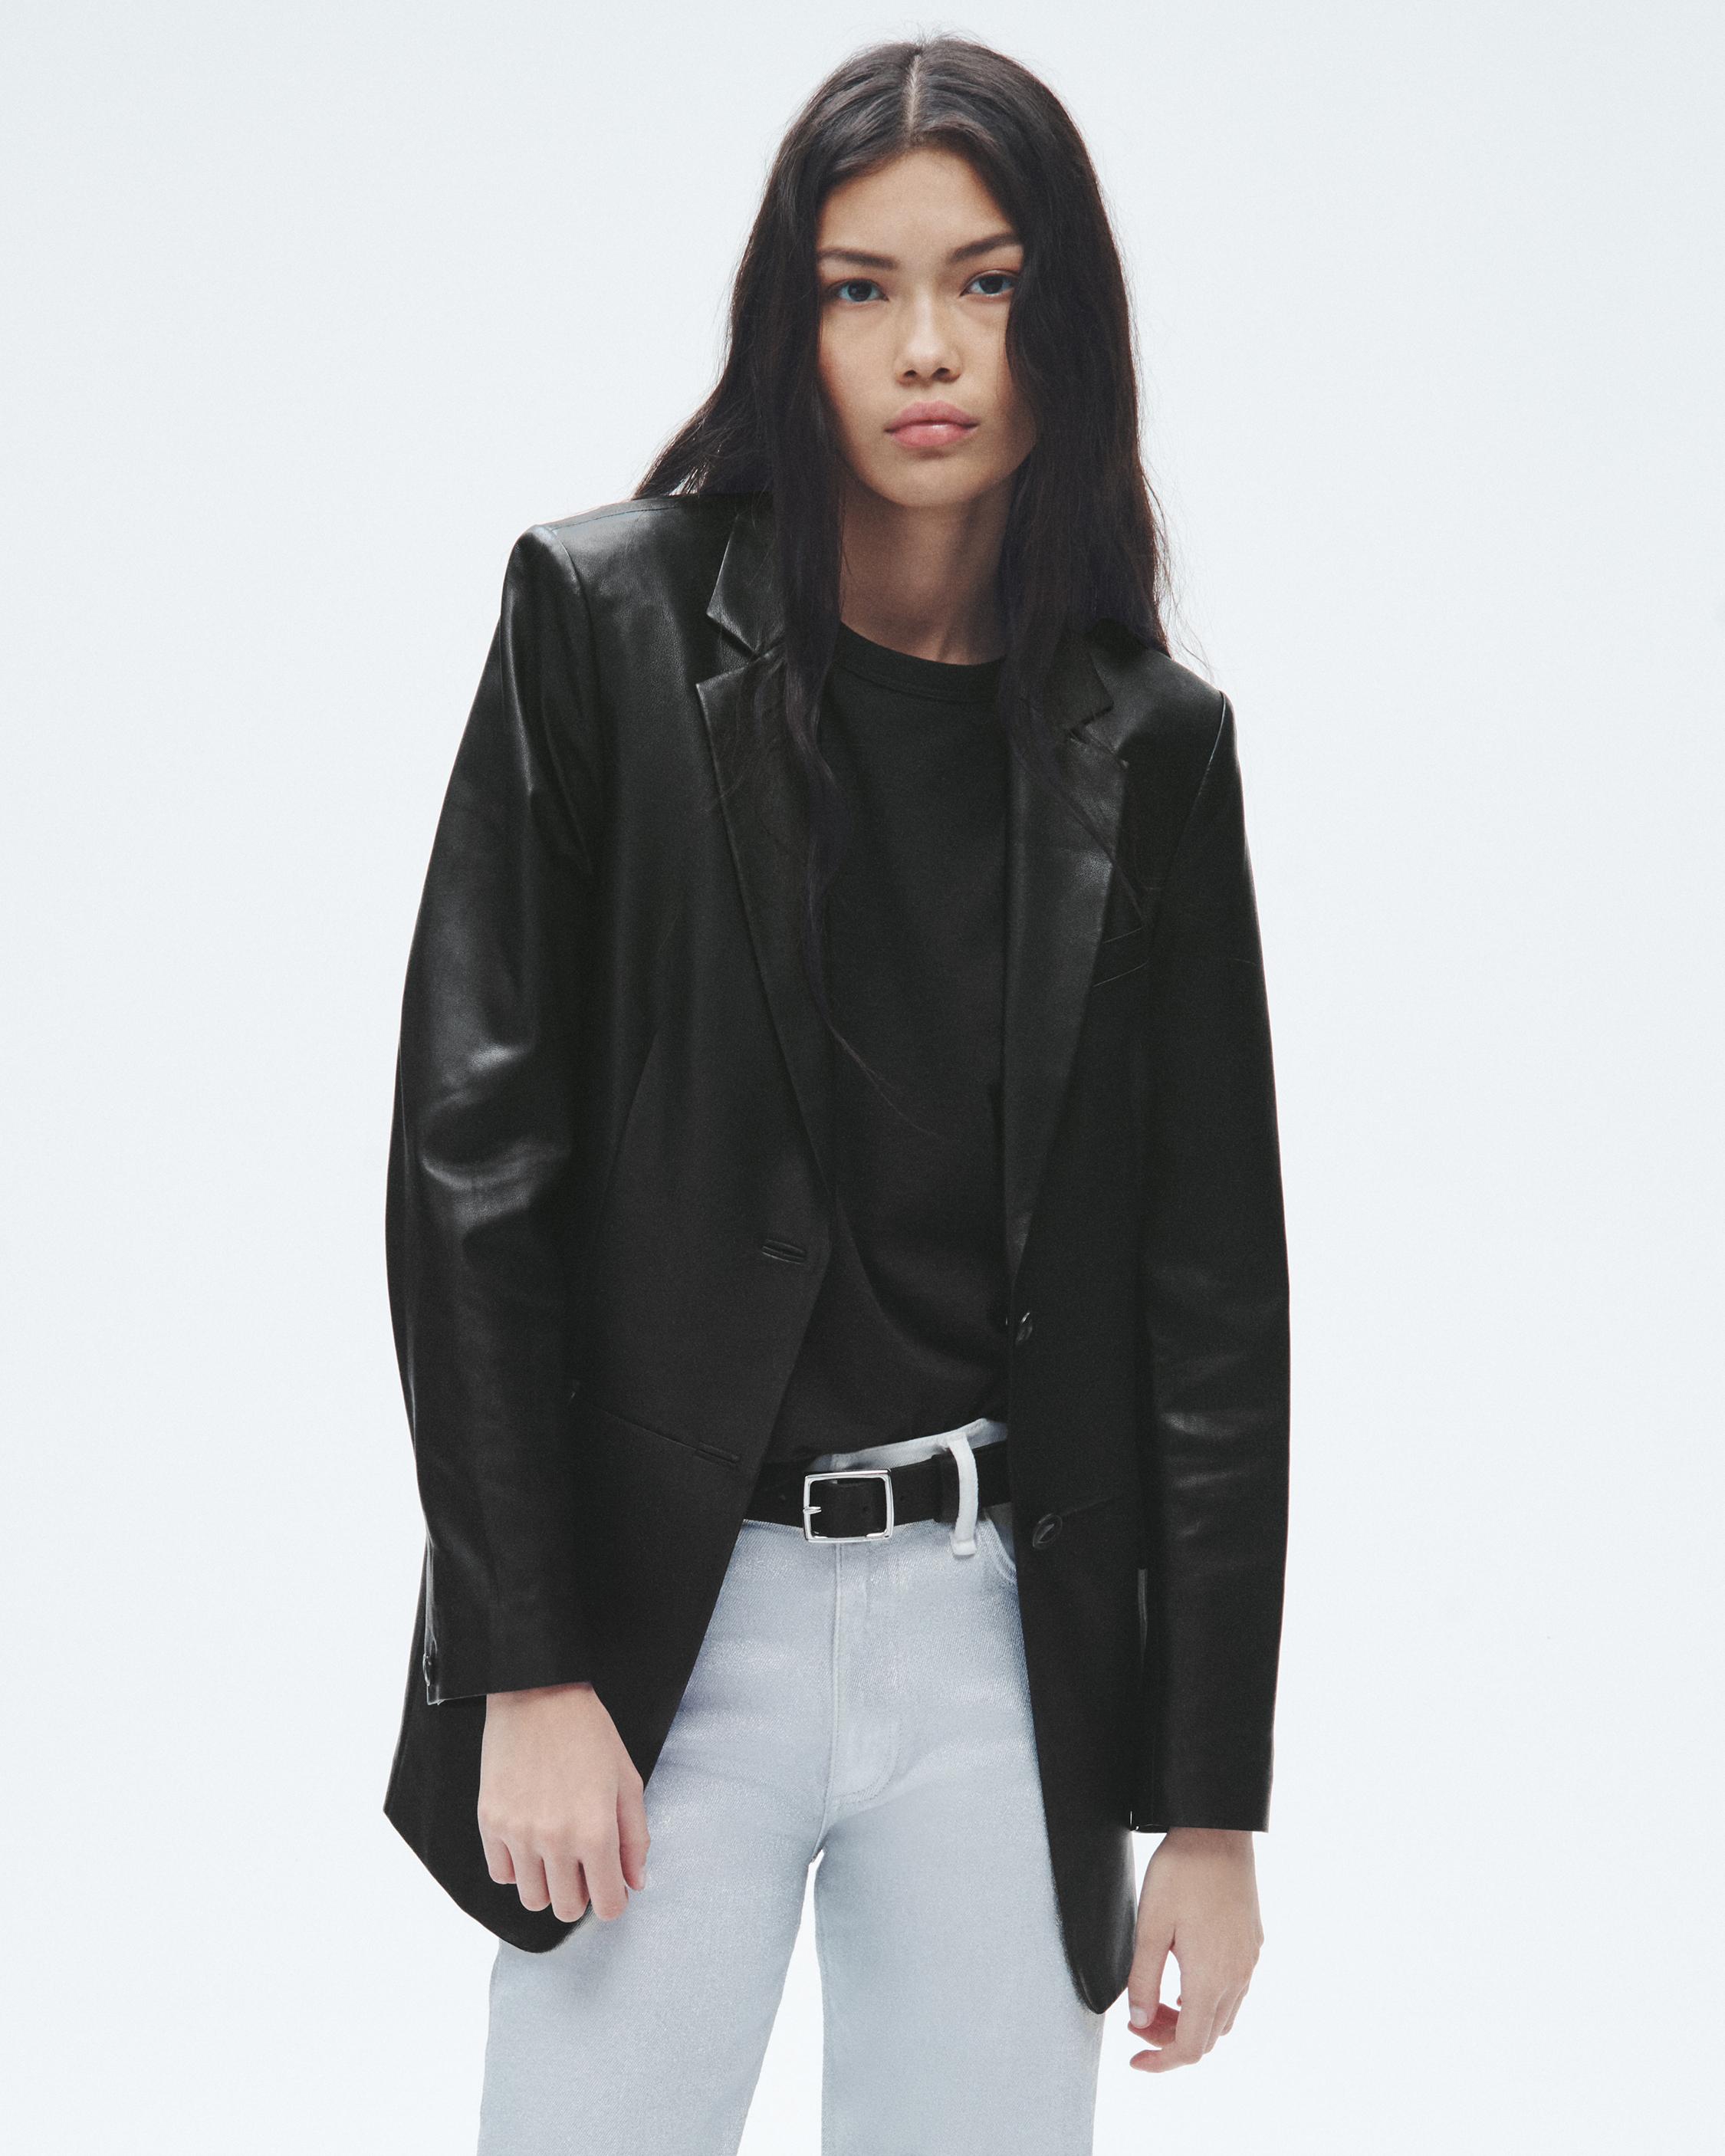 Women's Blazers & Vests in Sleek, Modern Styles | rag & bone